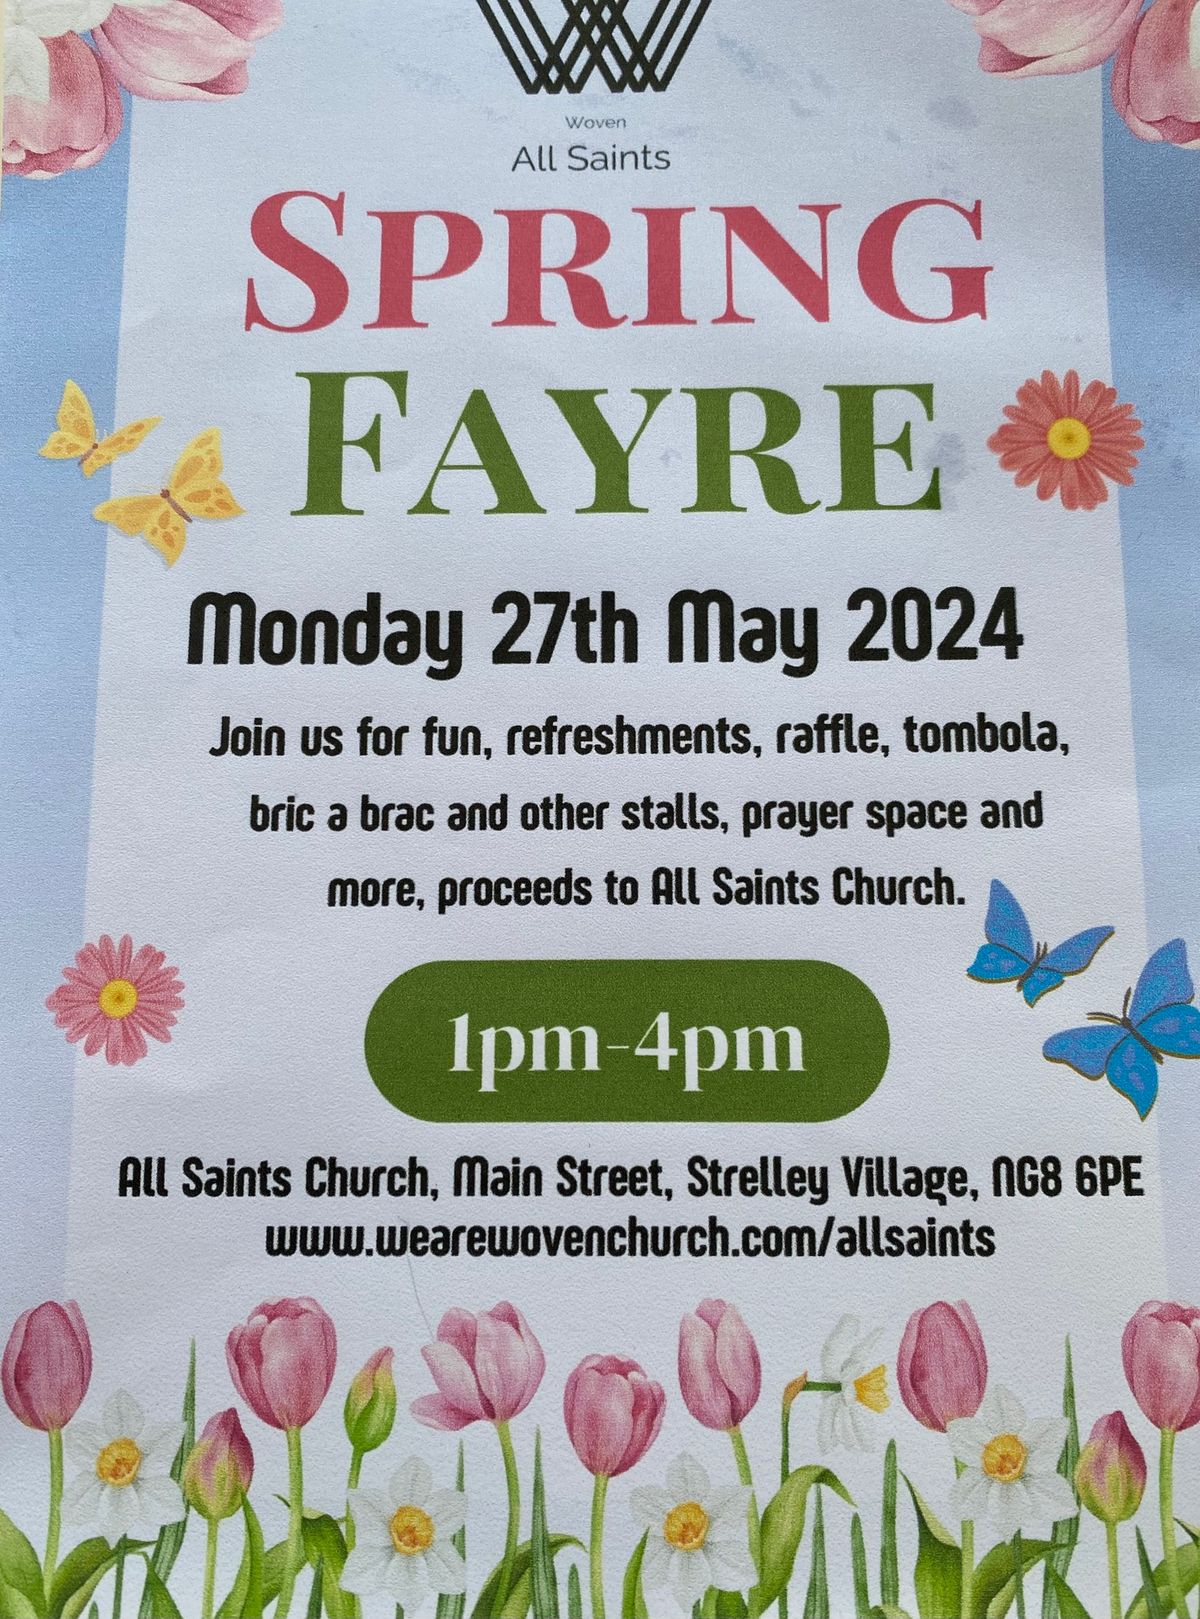 All Saints Spring Fayre